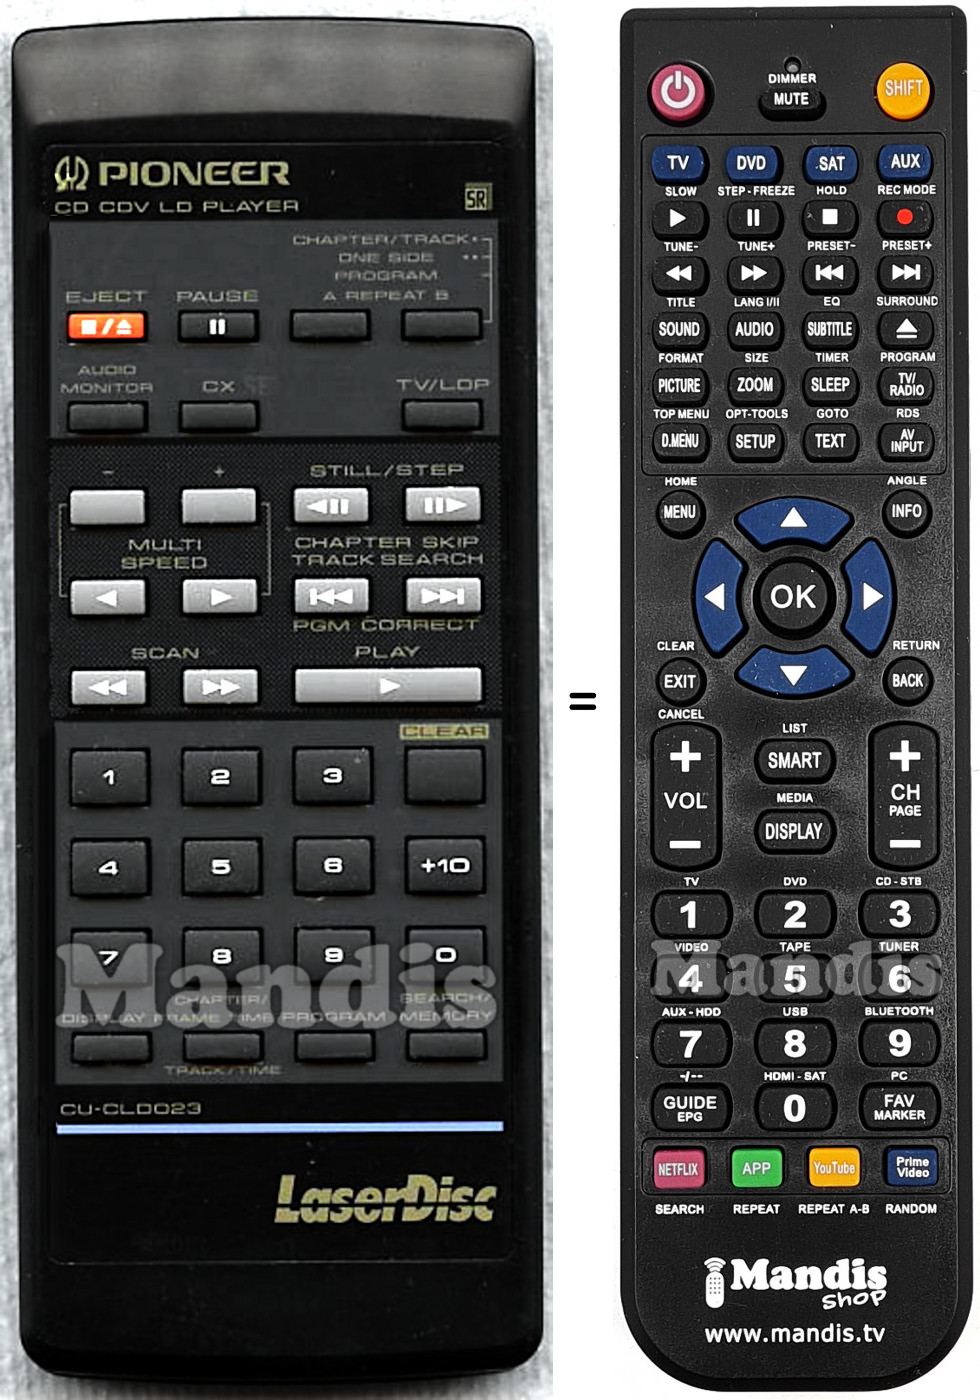 Replacement remote control Pioneer CU-CLD023